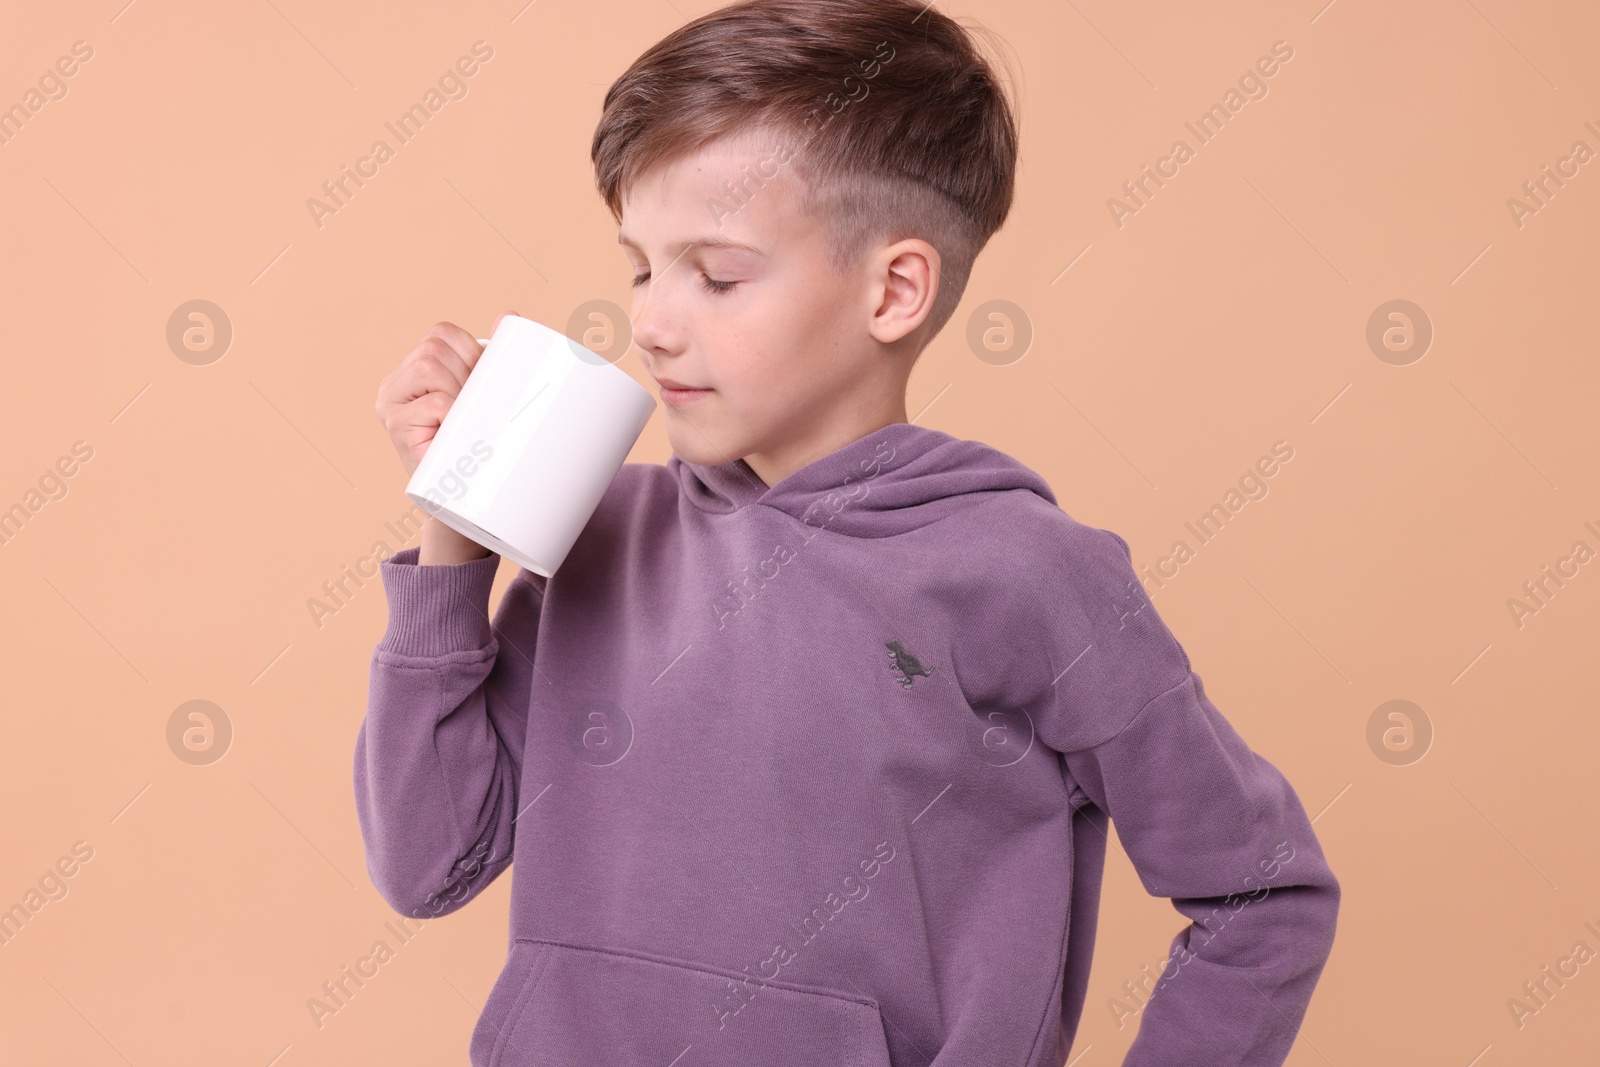 Photo of Cute boy drinking beverage from white ceramic mug on beige background